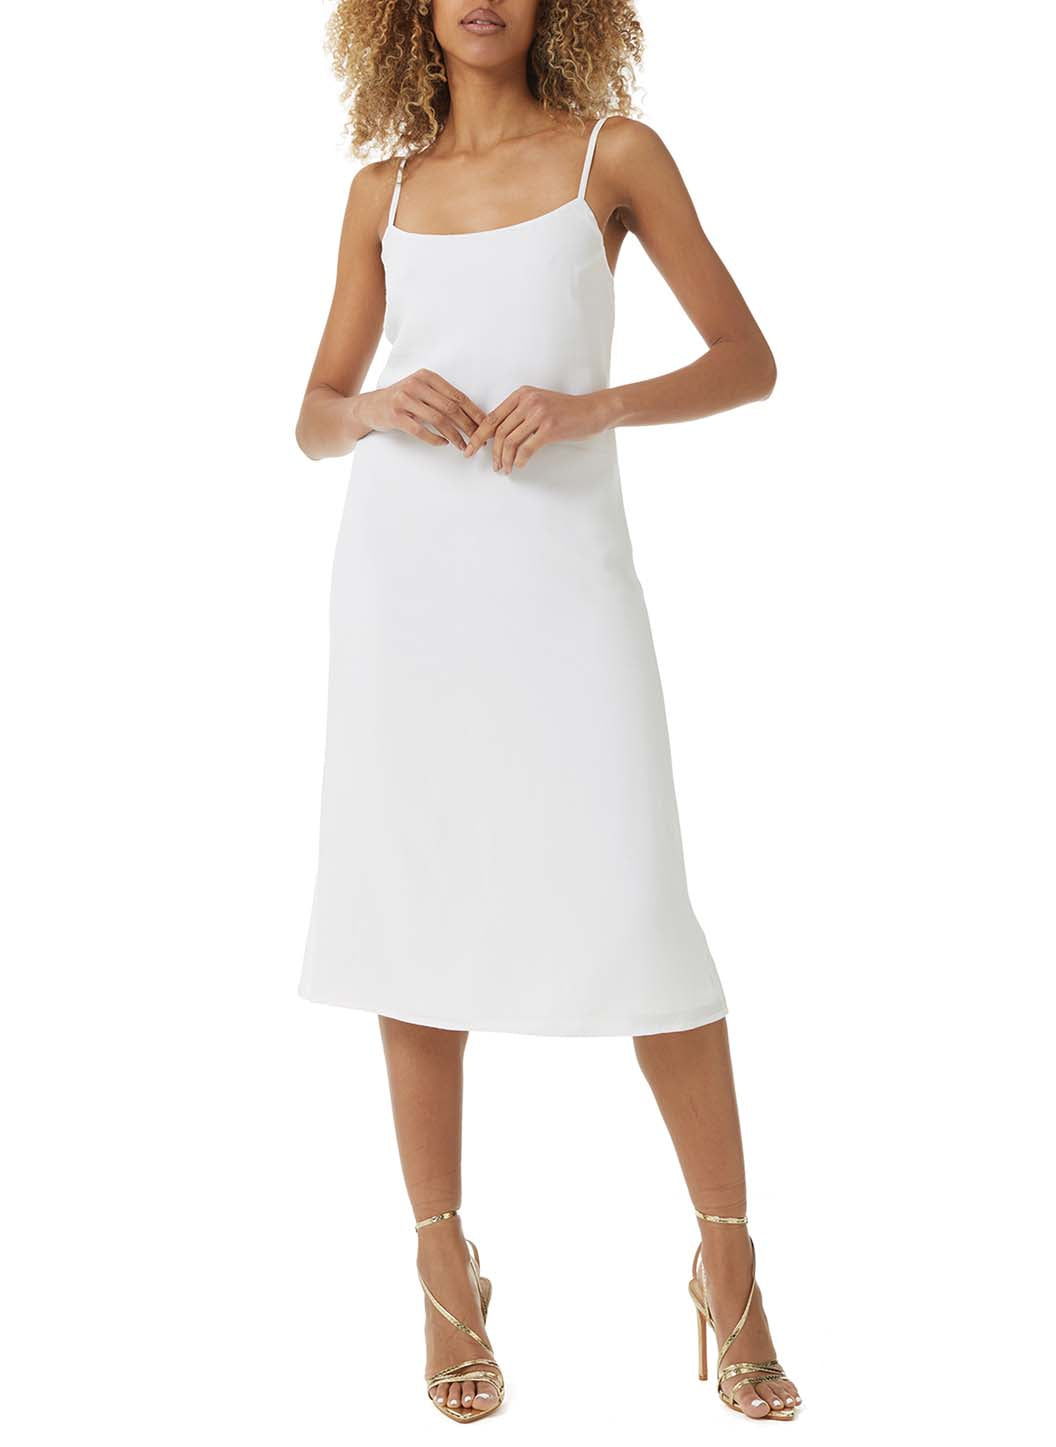 Primrose White Crepe Dress Posed